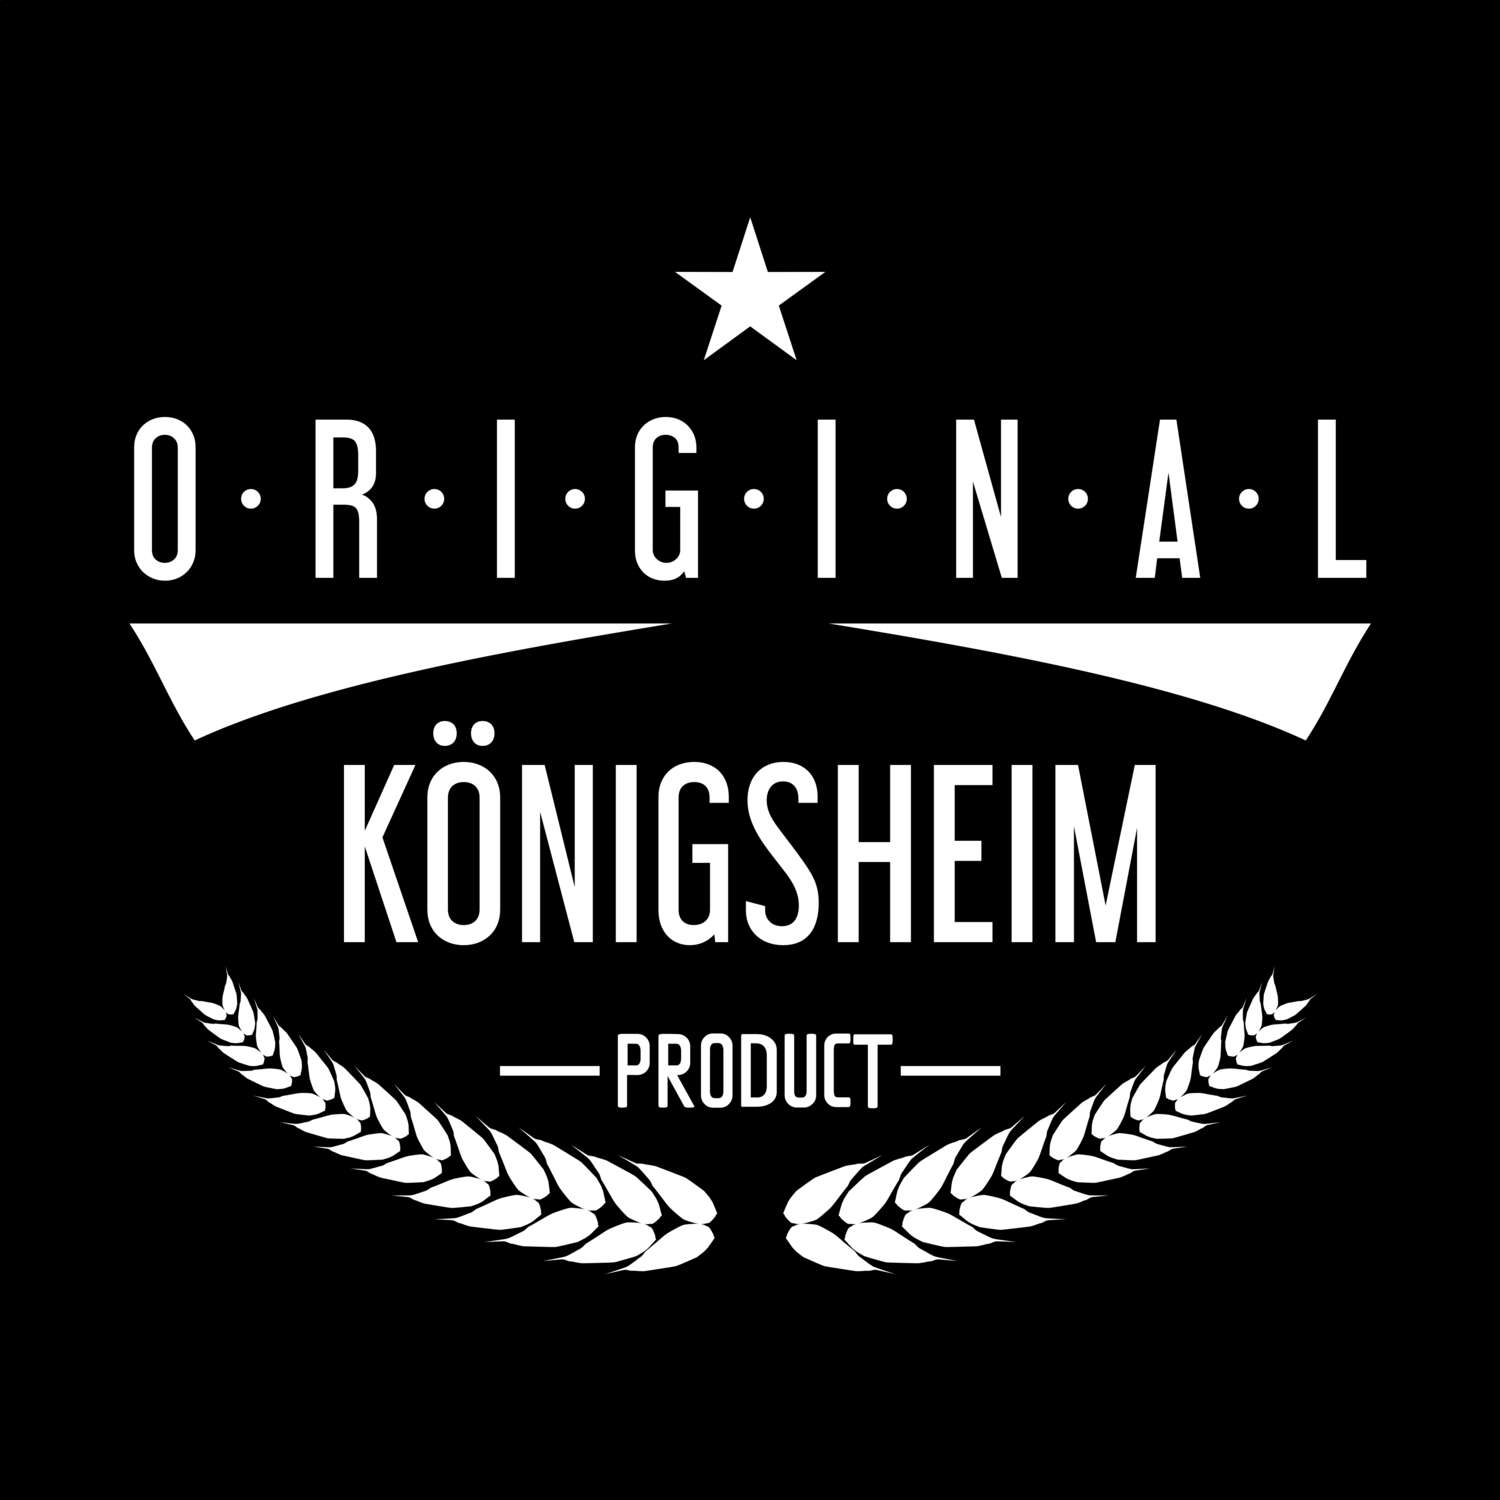 Königsheim T-Shirt »Original Product«